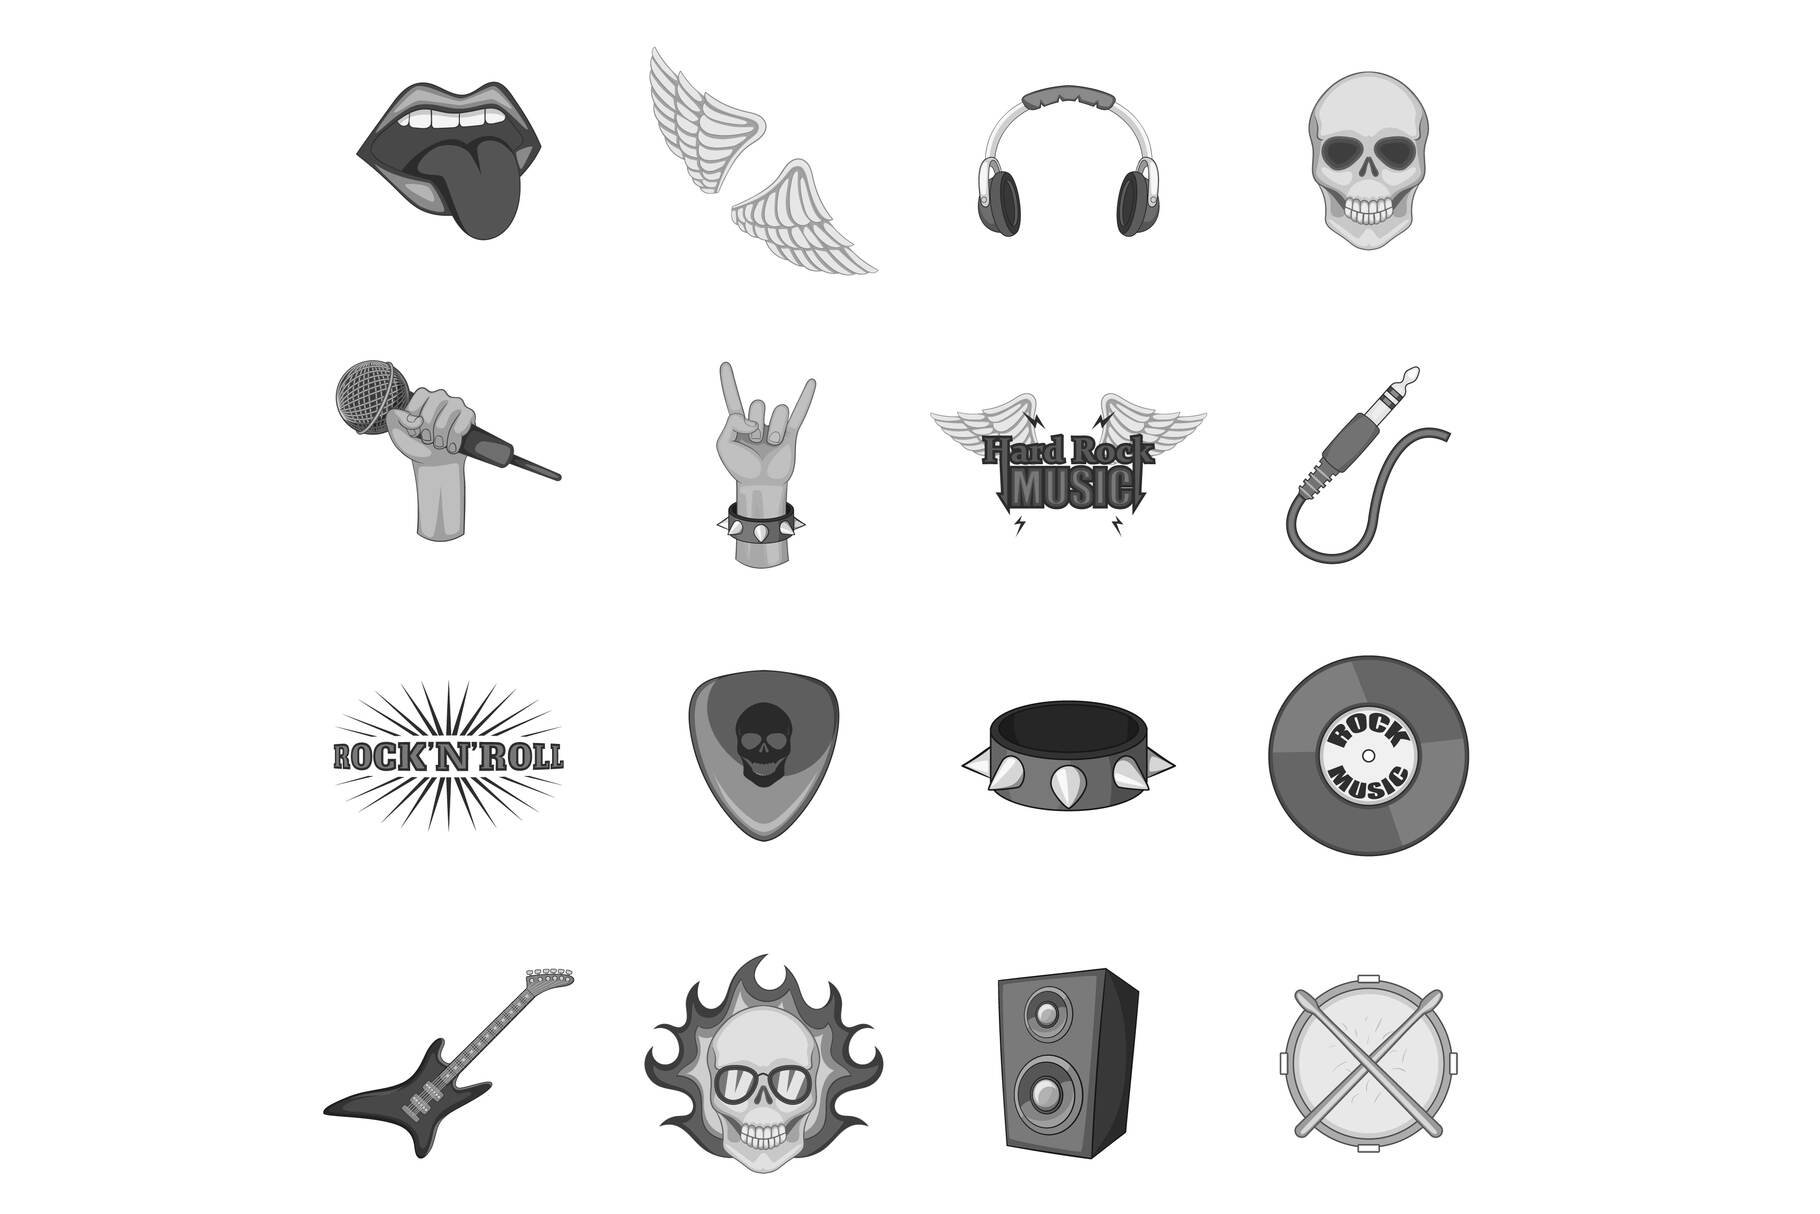 Rock music icons set monochrome cover image.